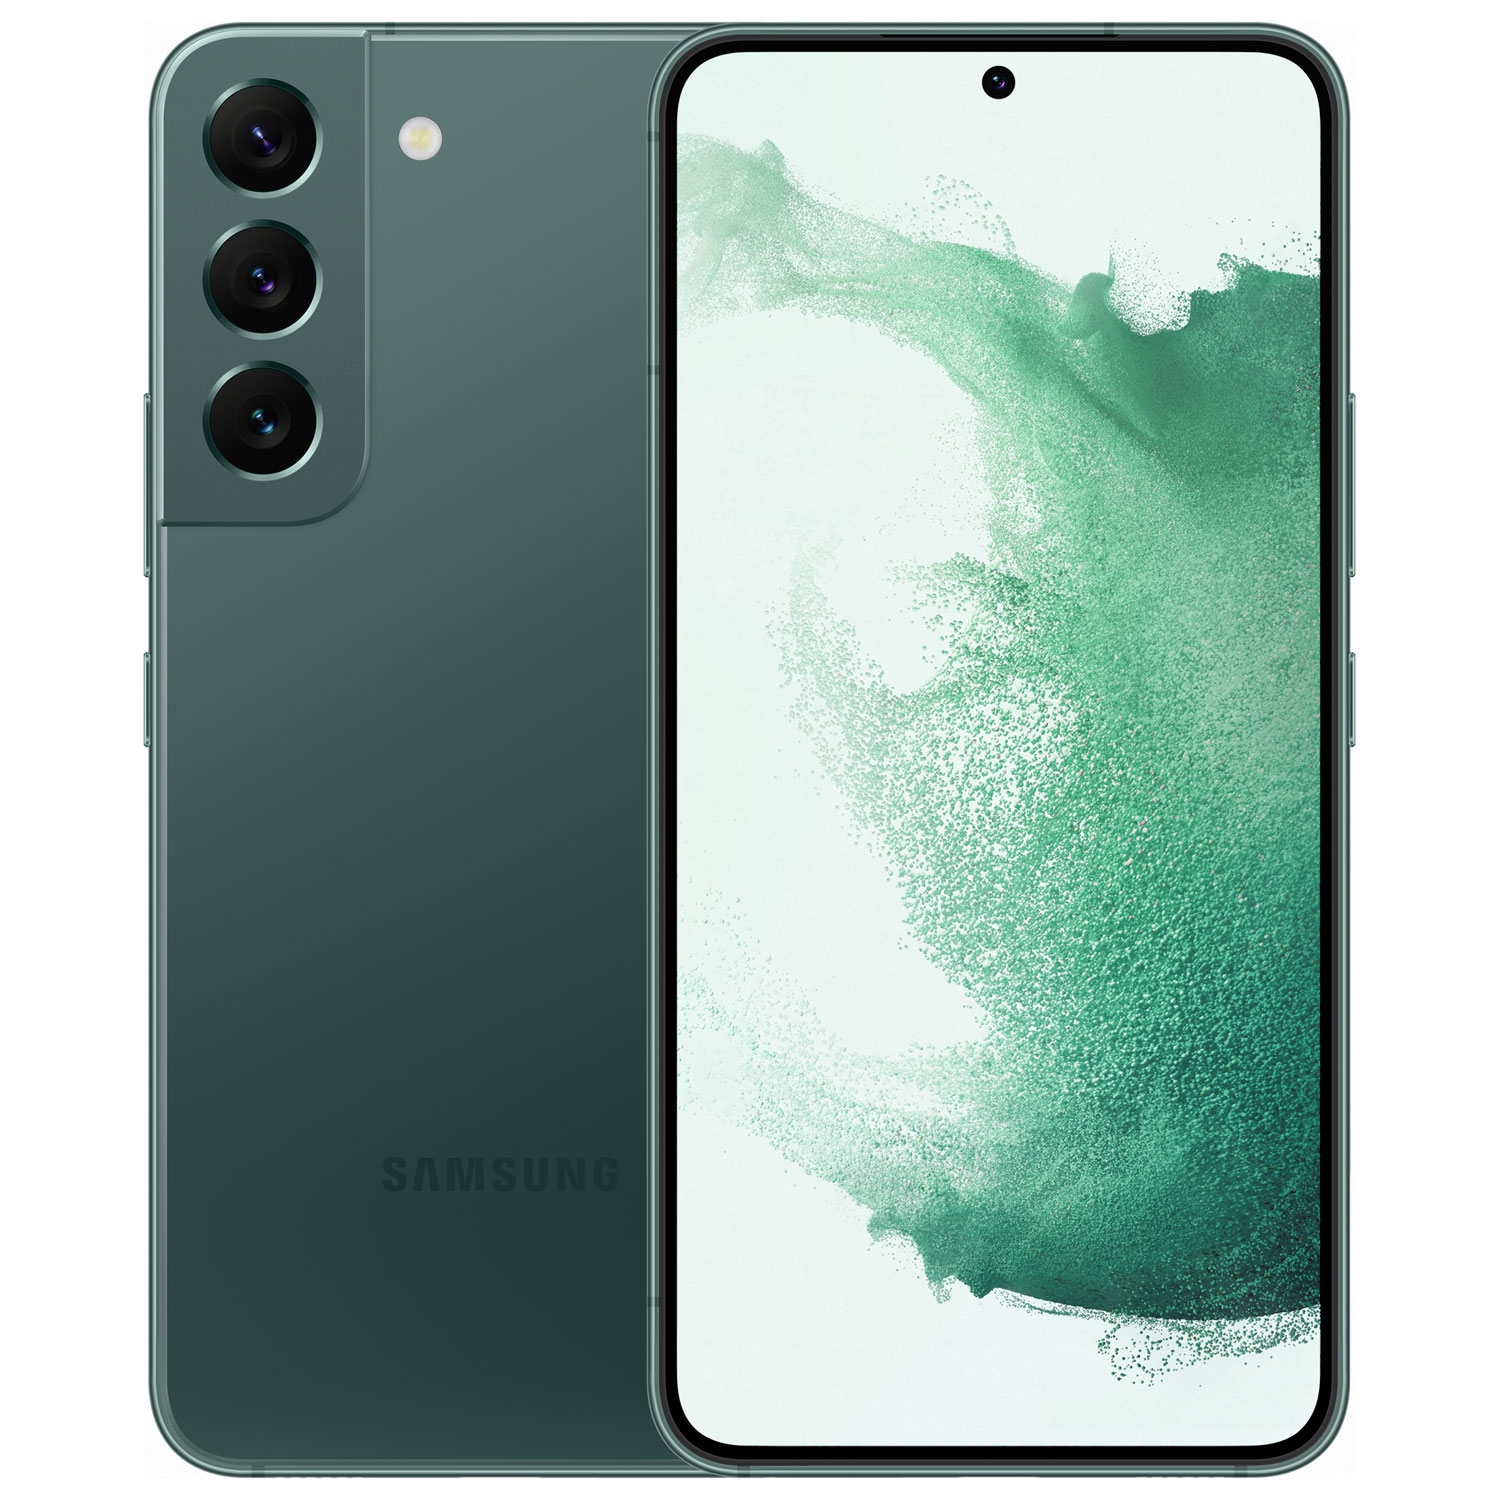 Refurbished (Good) - Samsung Galaxy S22 5G 128GB - Green - Unlocked